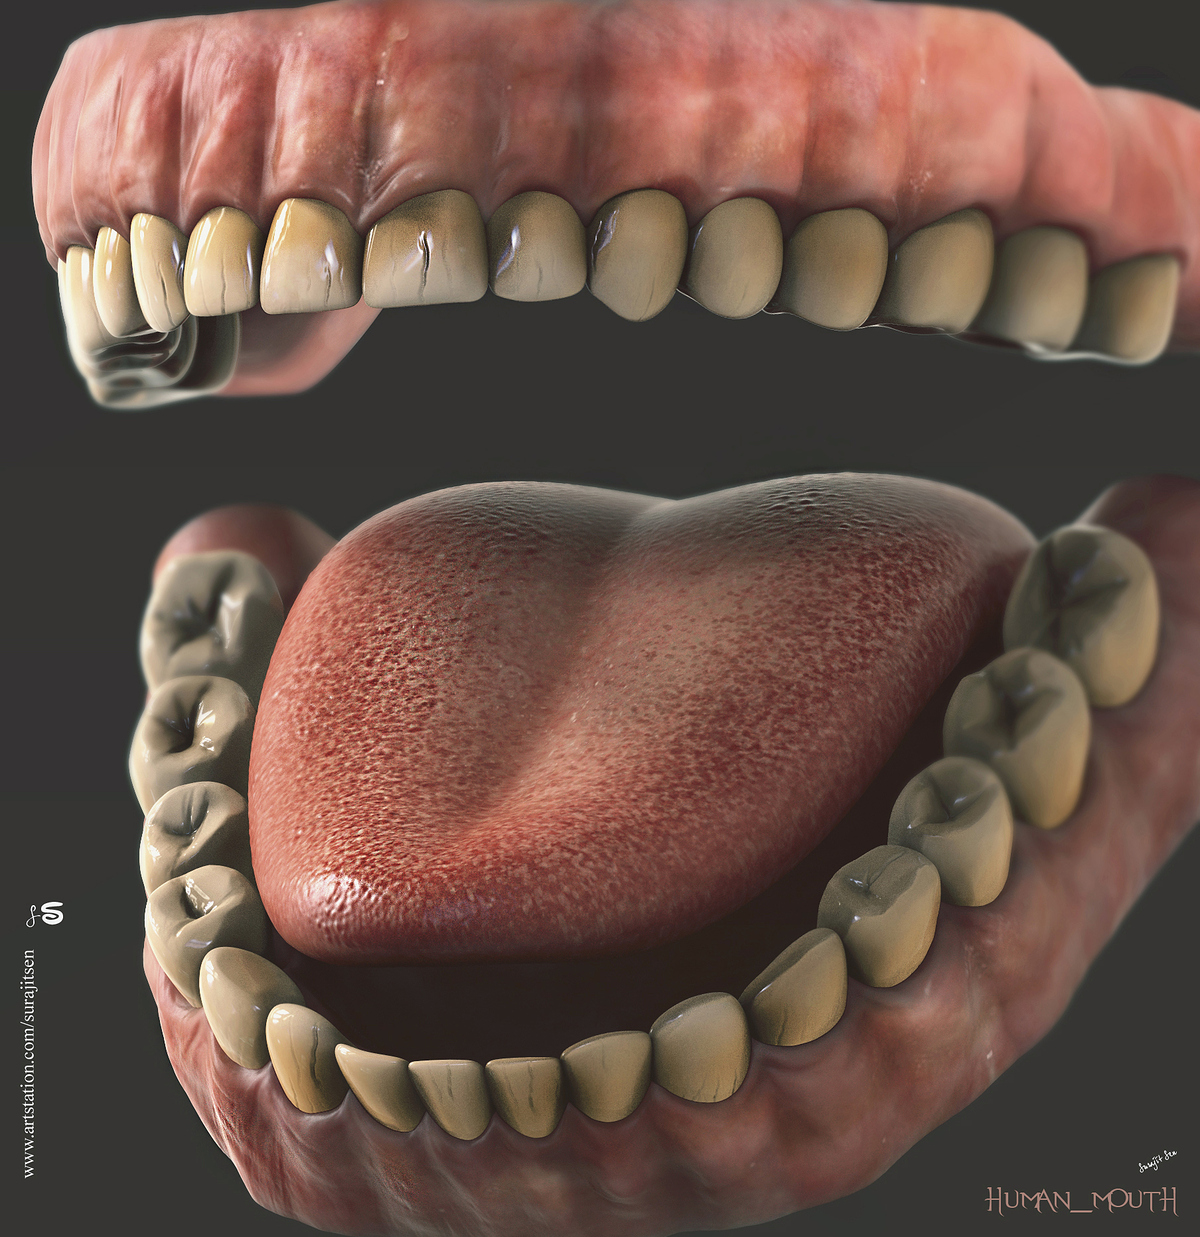 Human_mouth_CG_SurajitSen_Digital_Sculpture_Aug2019_U